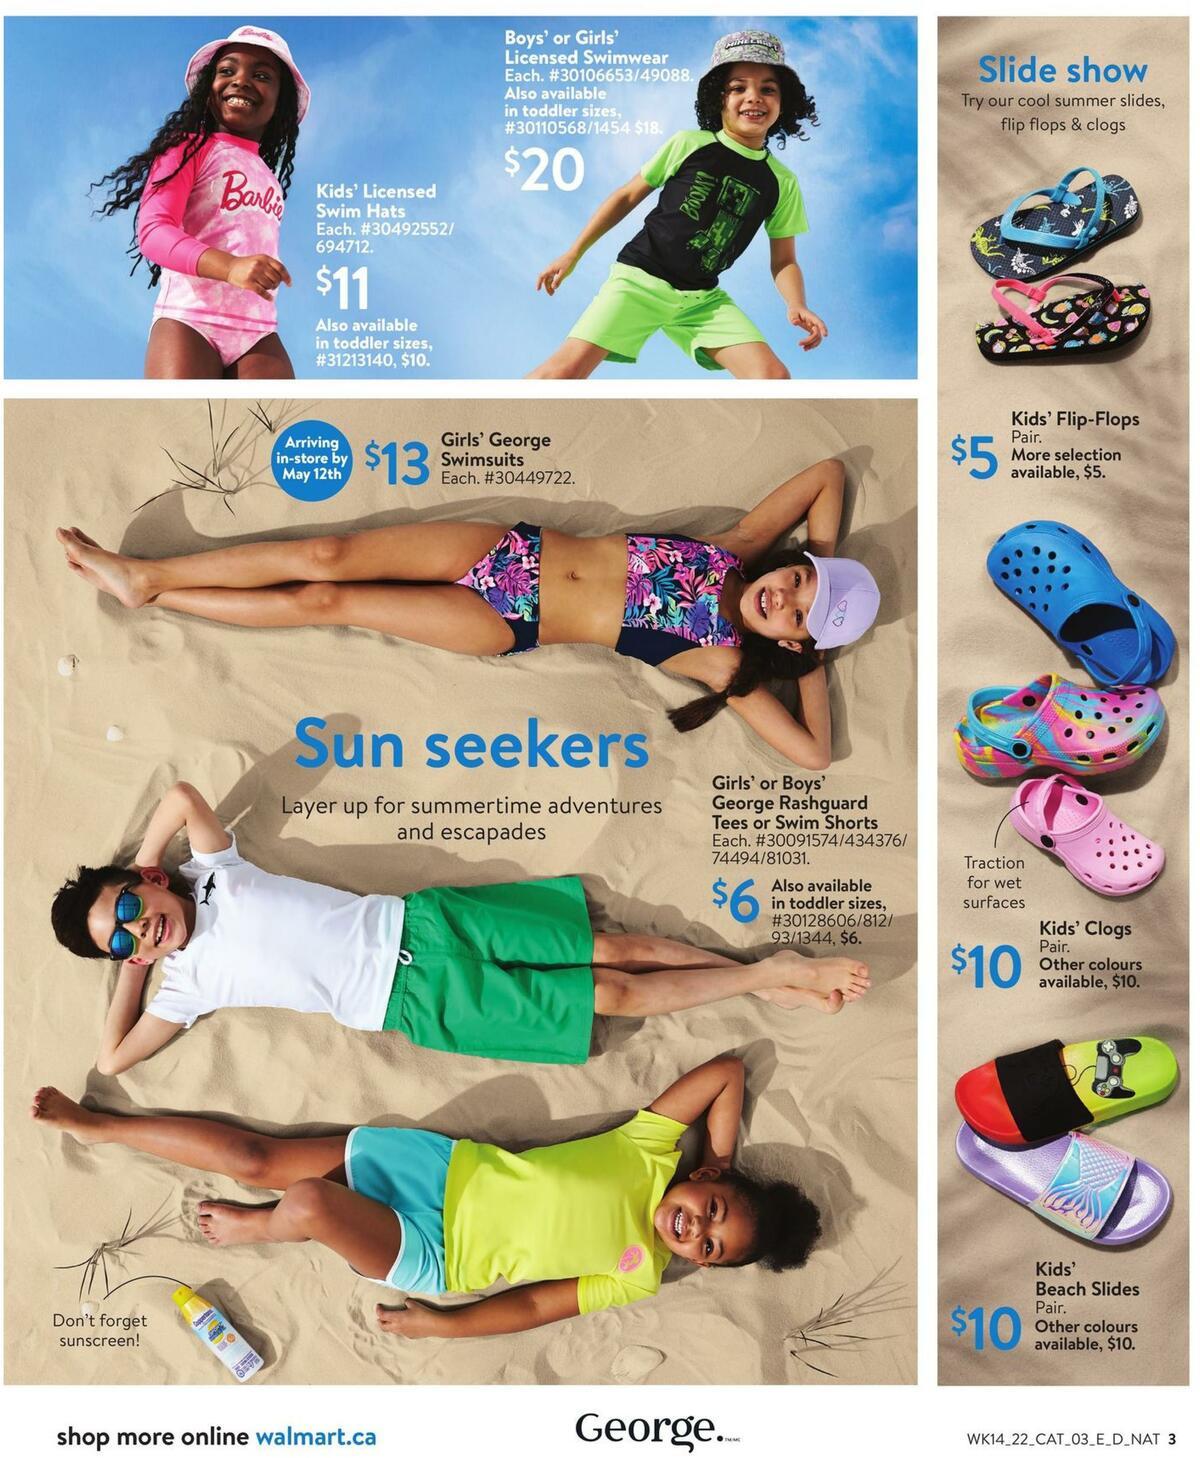 Walmart Summer Flyer from April 28